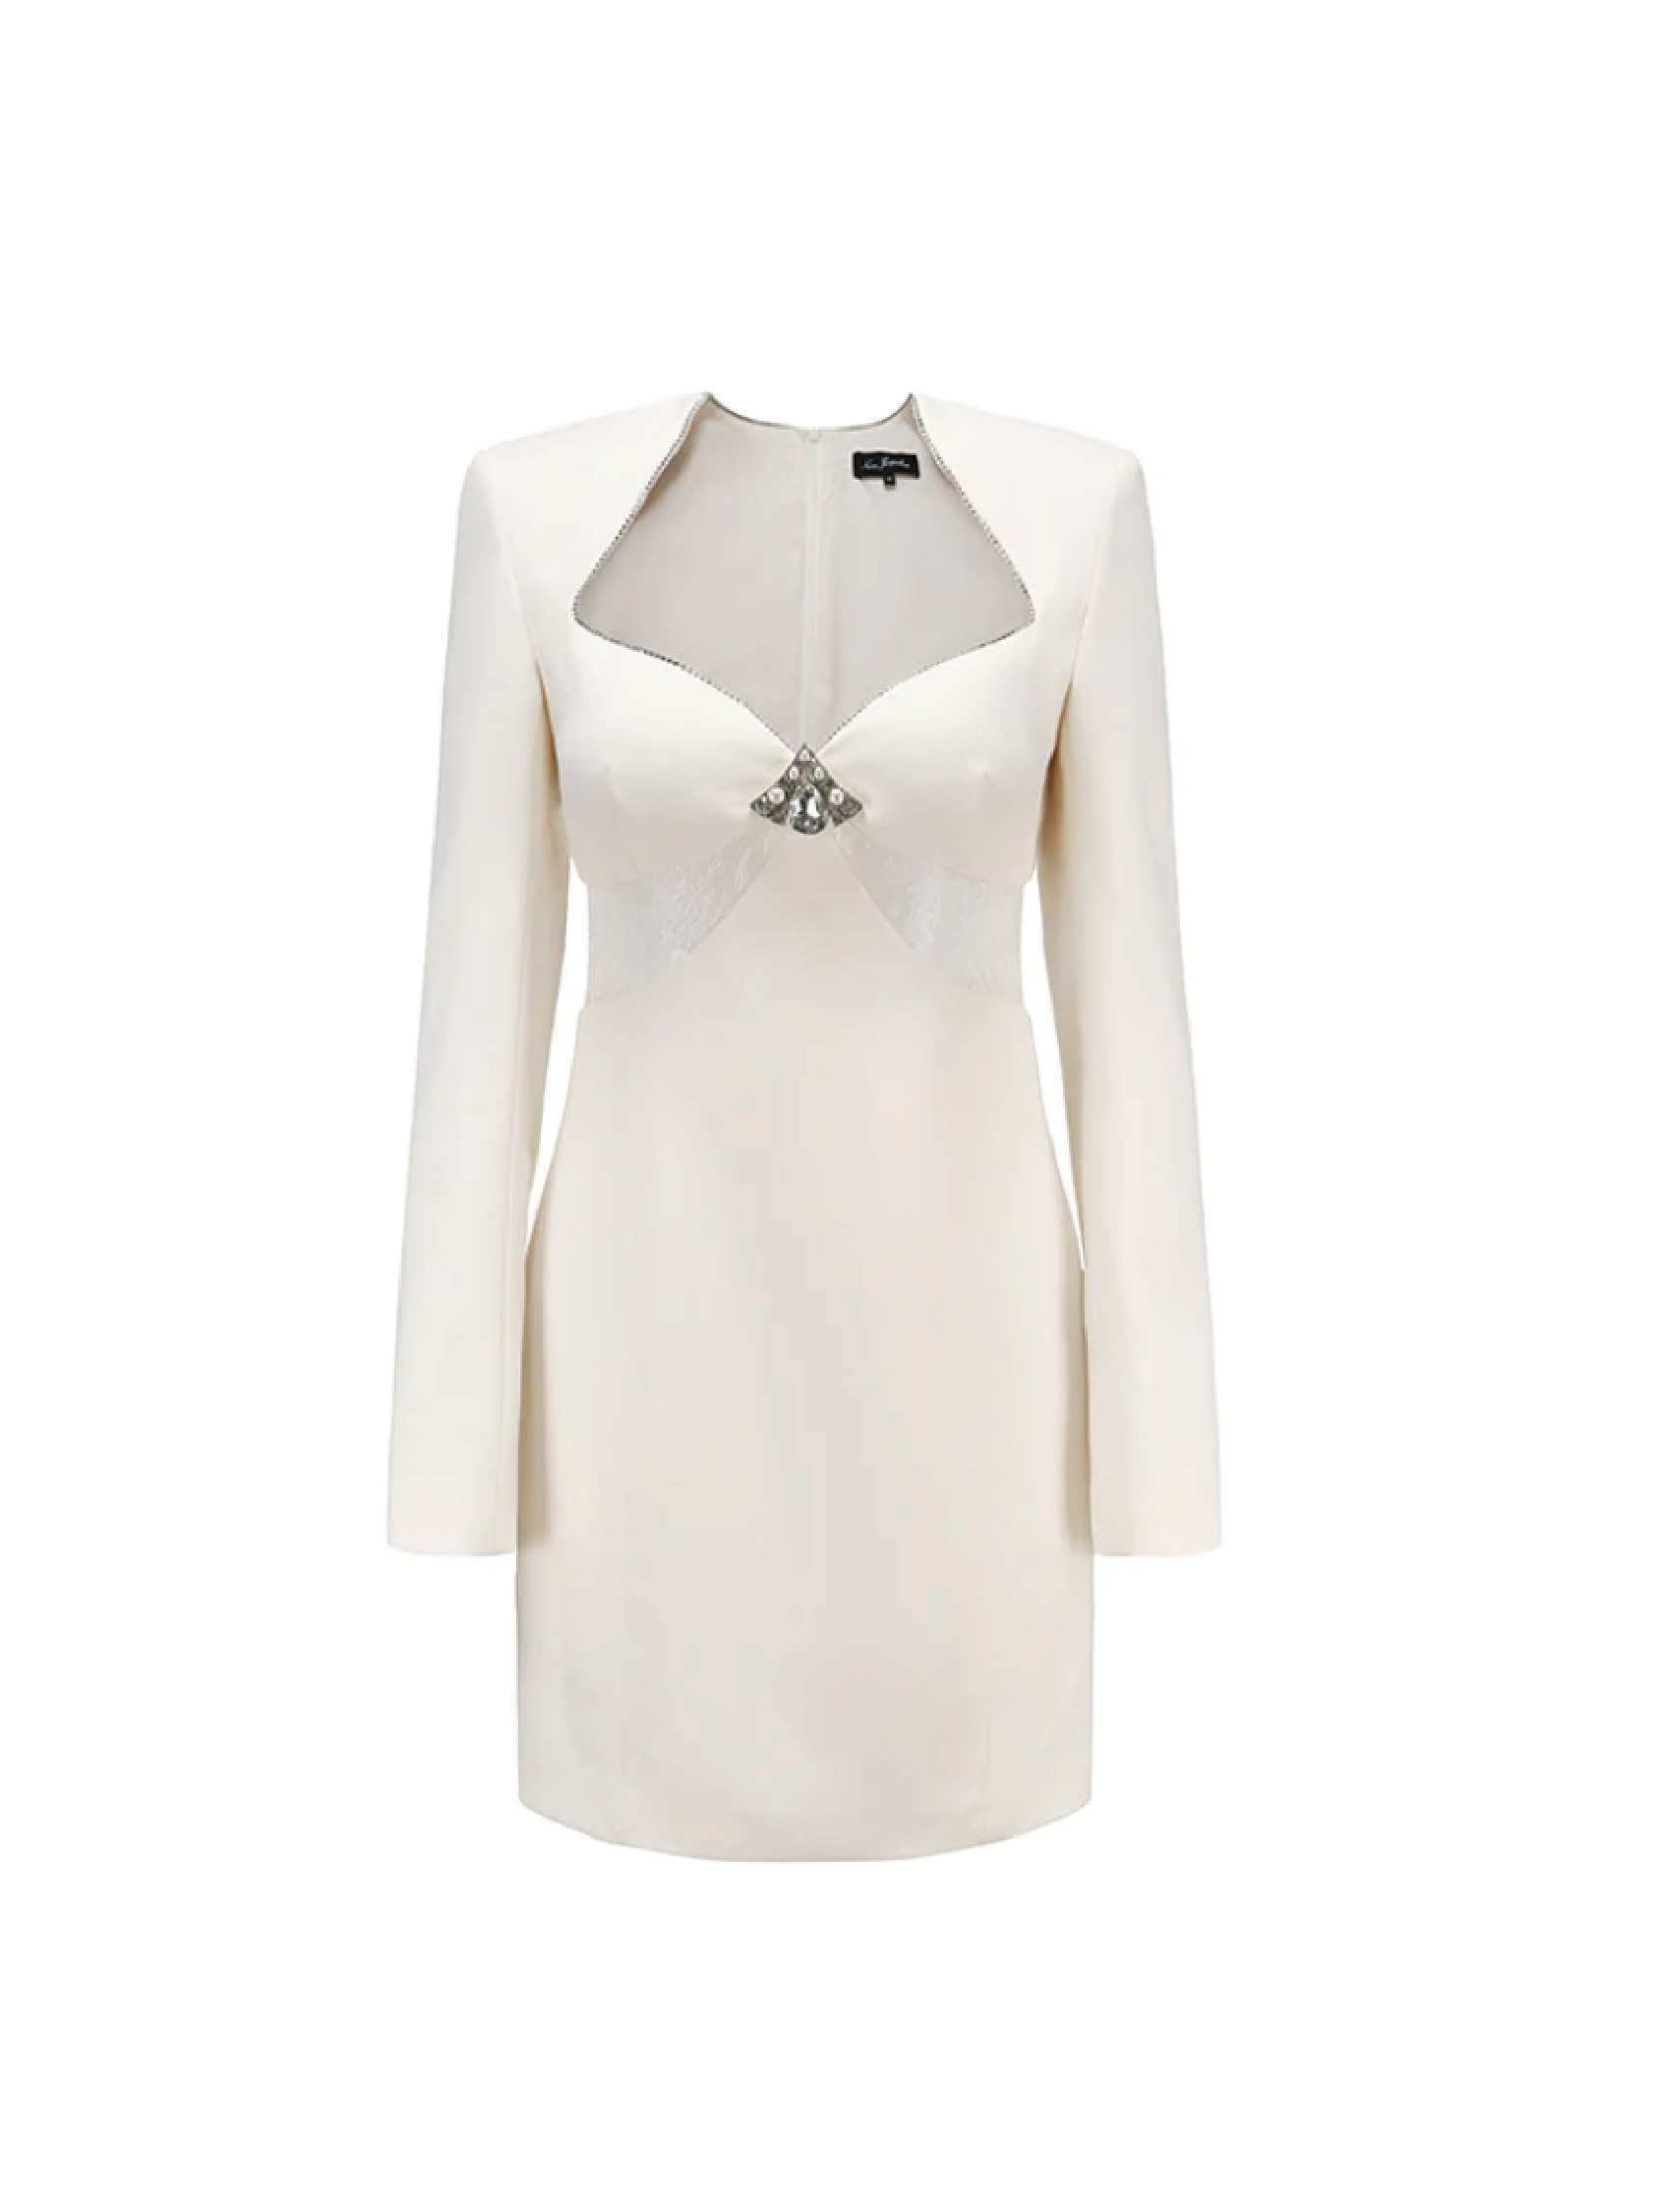 Marina Lace Dress (White)| Nana Jacqueline Designer Wear